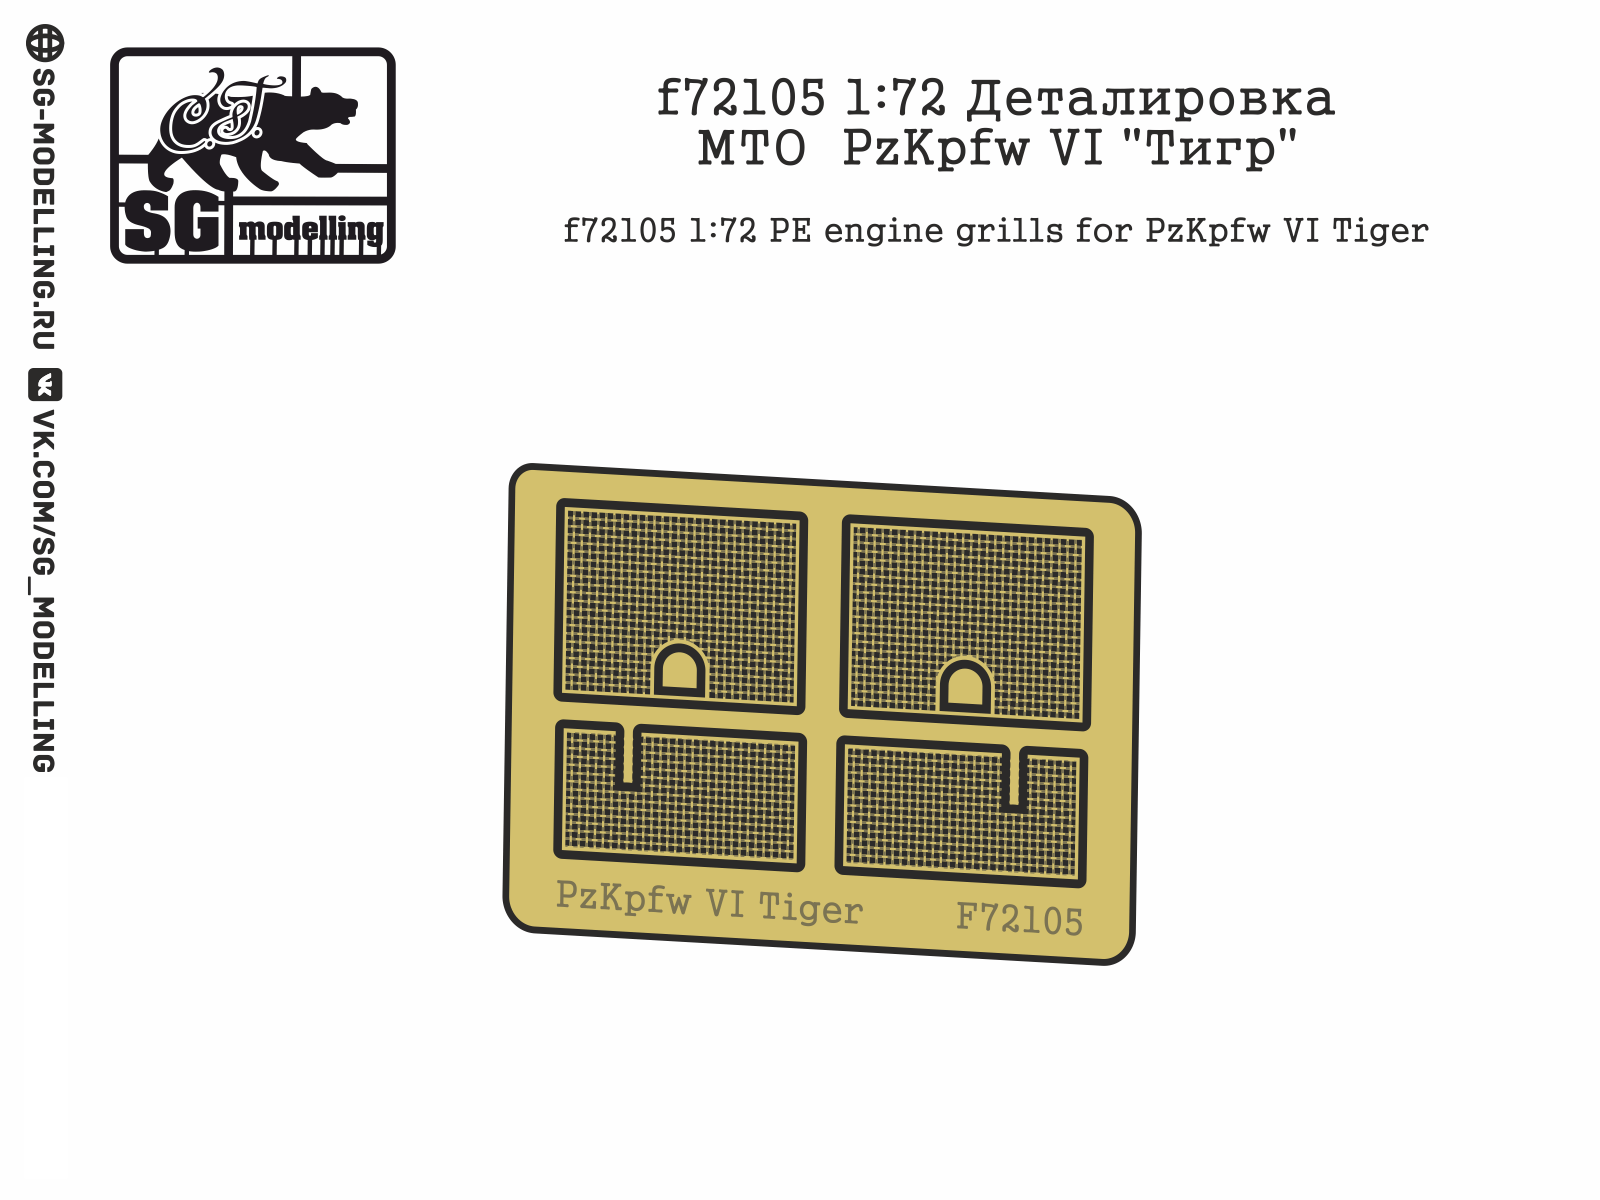 F72105 1:72 Detailing MTO PZKPFW VI "Tiger" (FTD) - imodeller.store